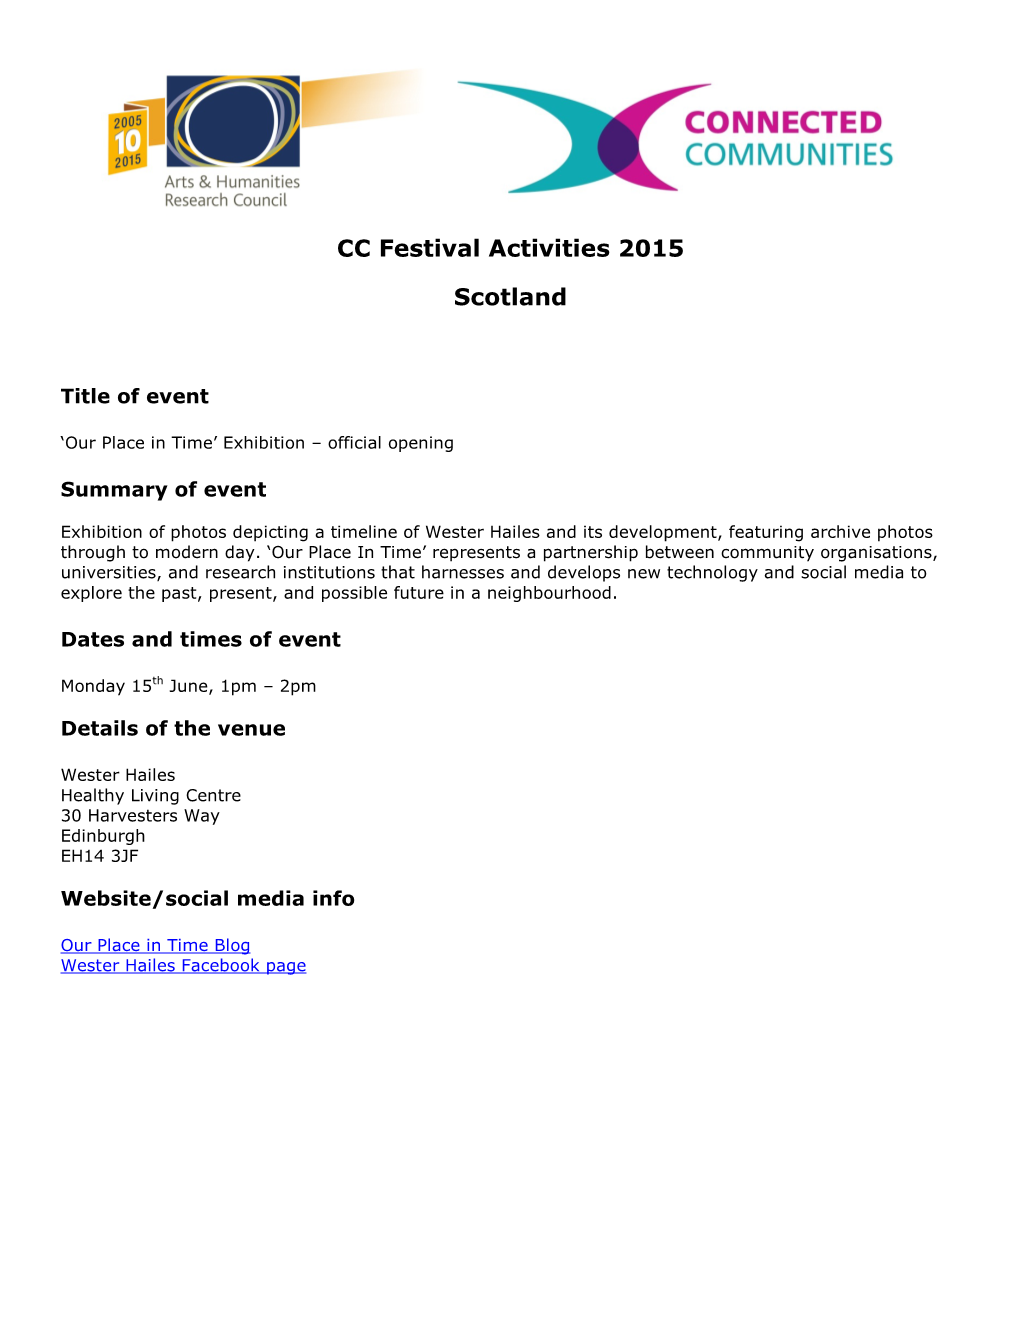 CC Festival Activities 2015 Scotland